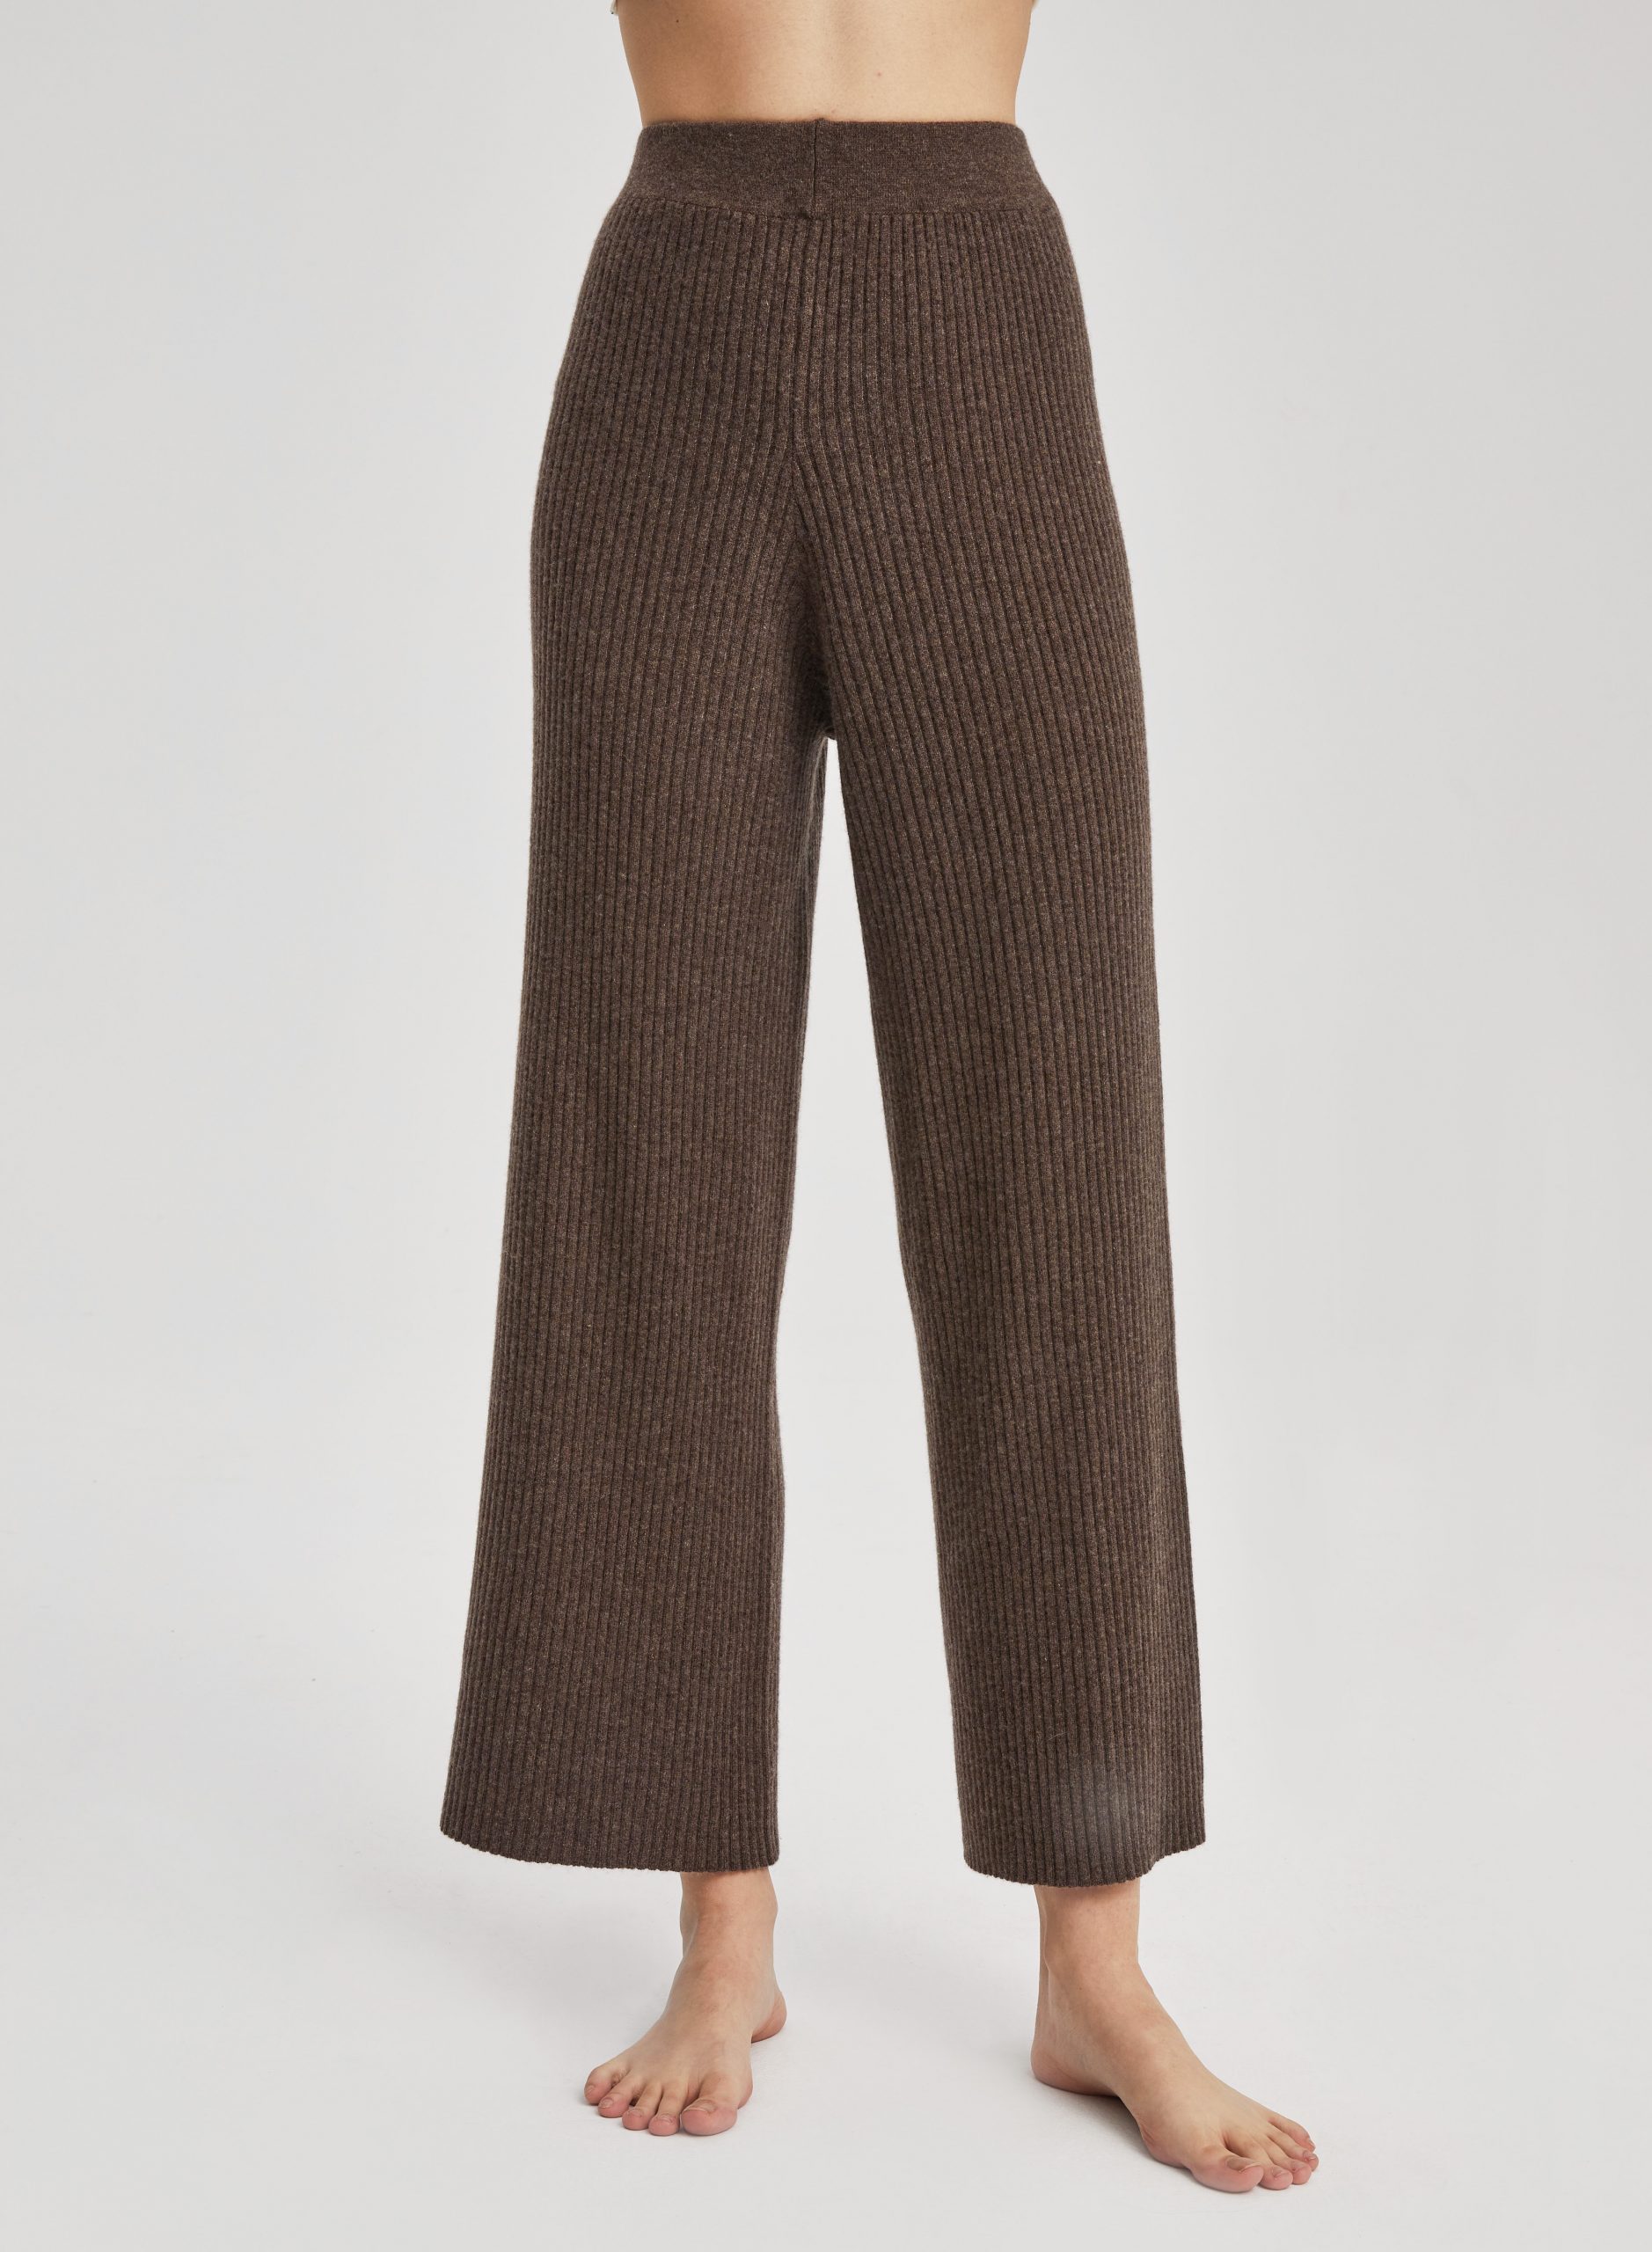 Cashmere Rib-Knit Leisure Bottoms | Wide-Leg Pants | Nap Loungewear